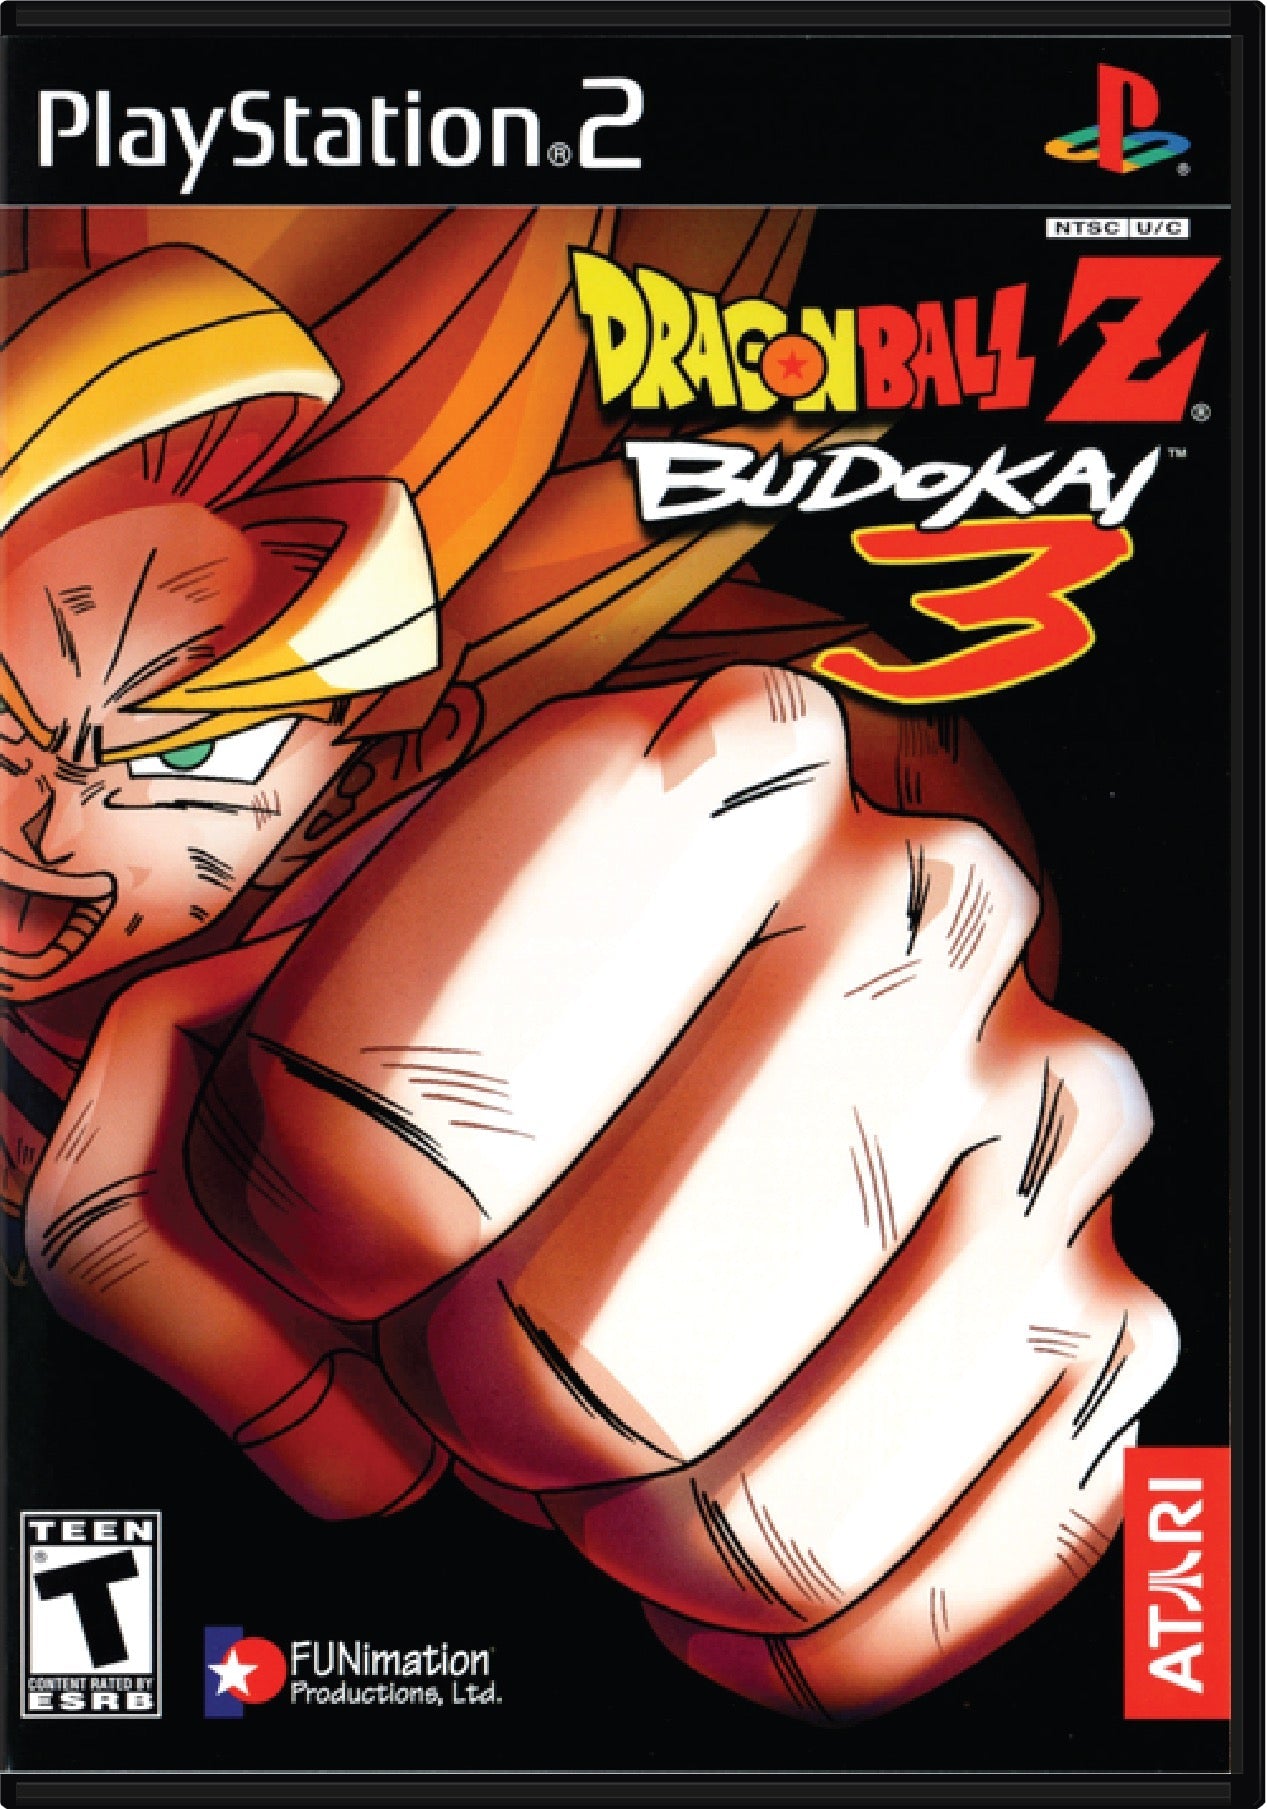 Dragon Ball Z - Budokai Tenkaichi 3 Danish - PS2